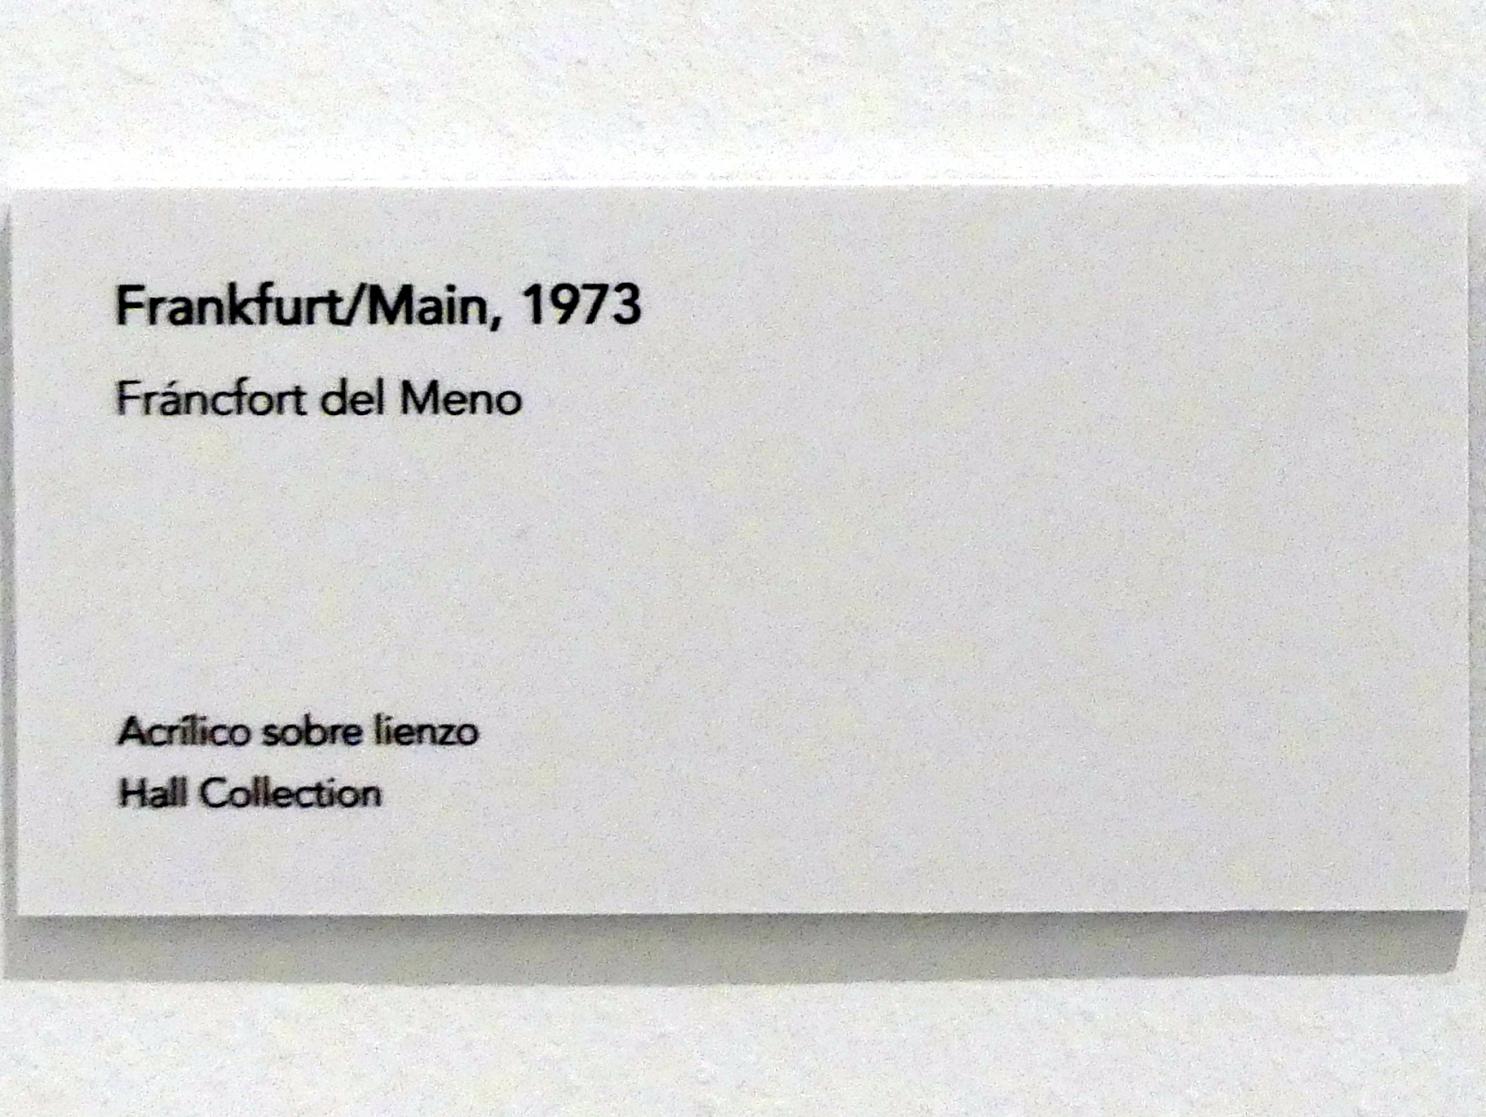 Jörg Immendorff (1965–2007), Frankfurt/Main, Madrid, Museo Reina Sofía, Ausstellung "Jörg Immendorff - The Task of the Painter" vom 30.10.2019-13.04.2020, Saal 3, 1973, Bild 2/2